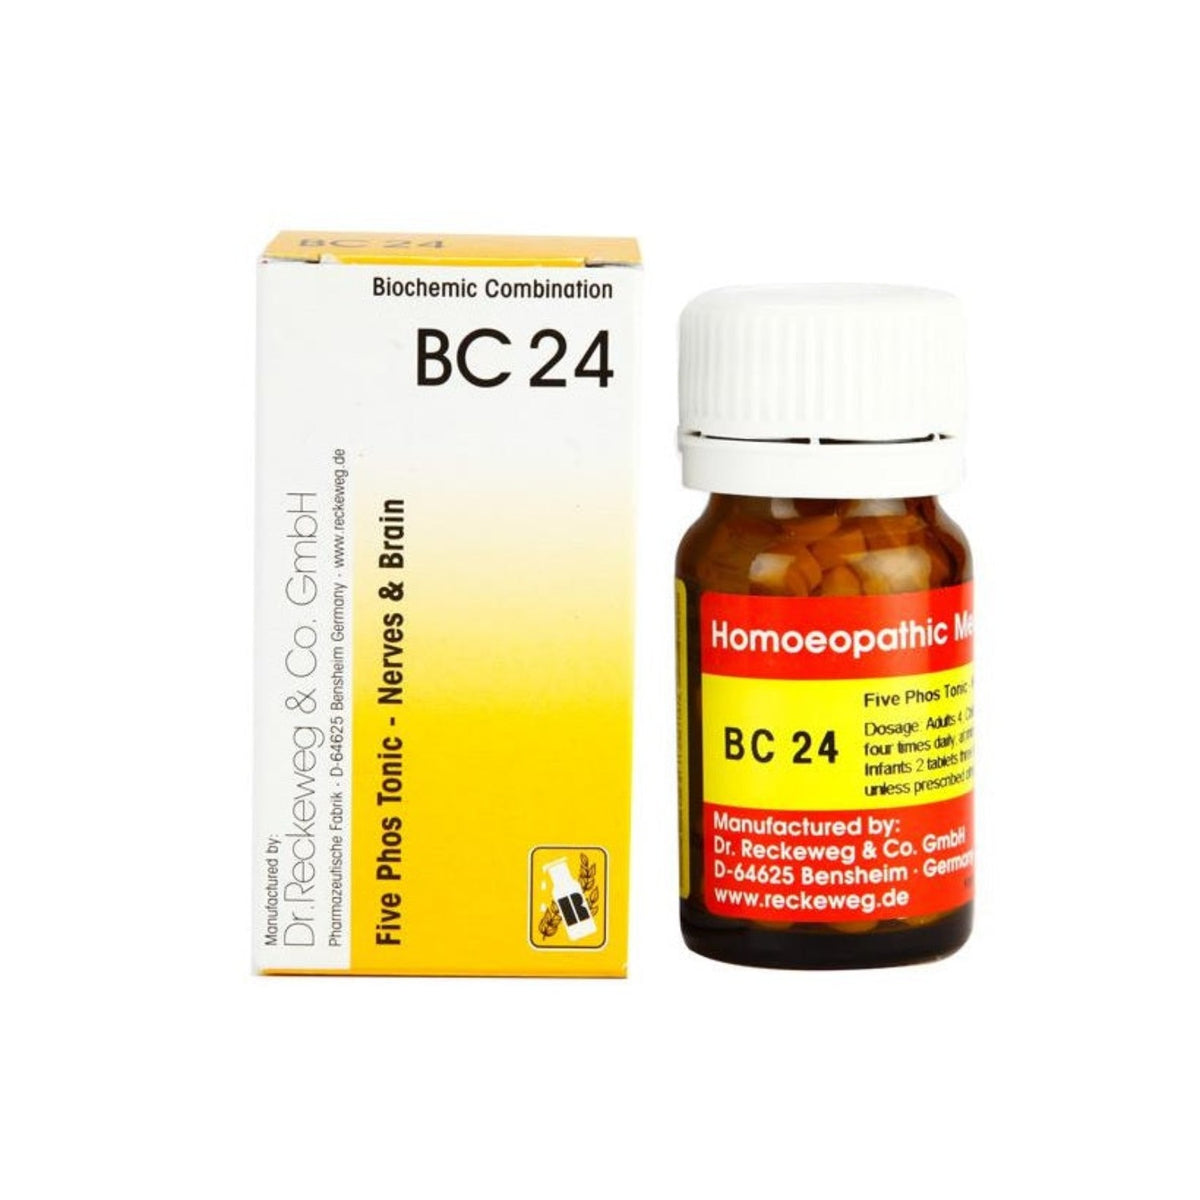 Dr. Reckeweg Homöopathie Five Phos Tonic - Nerven &amp; Gehirn Bio-Kombination 24 (BC 24) 20g Tablette